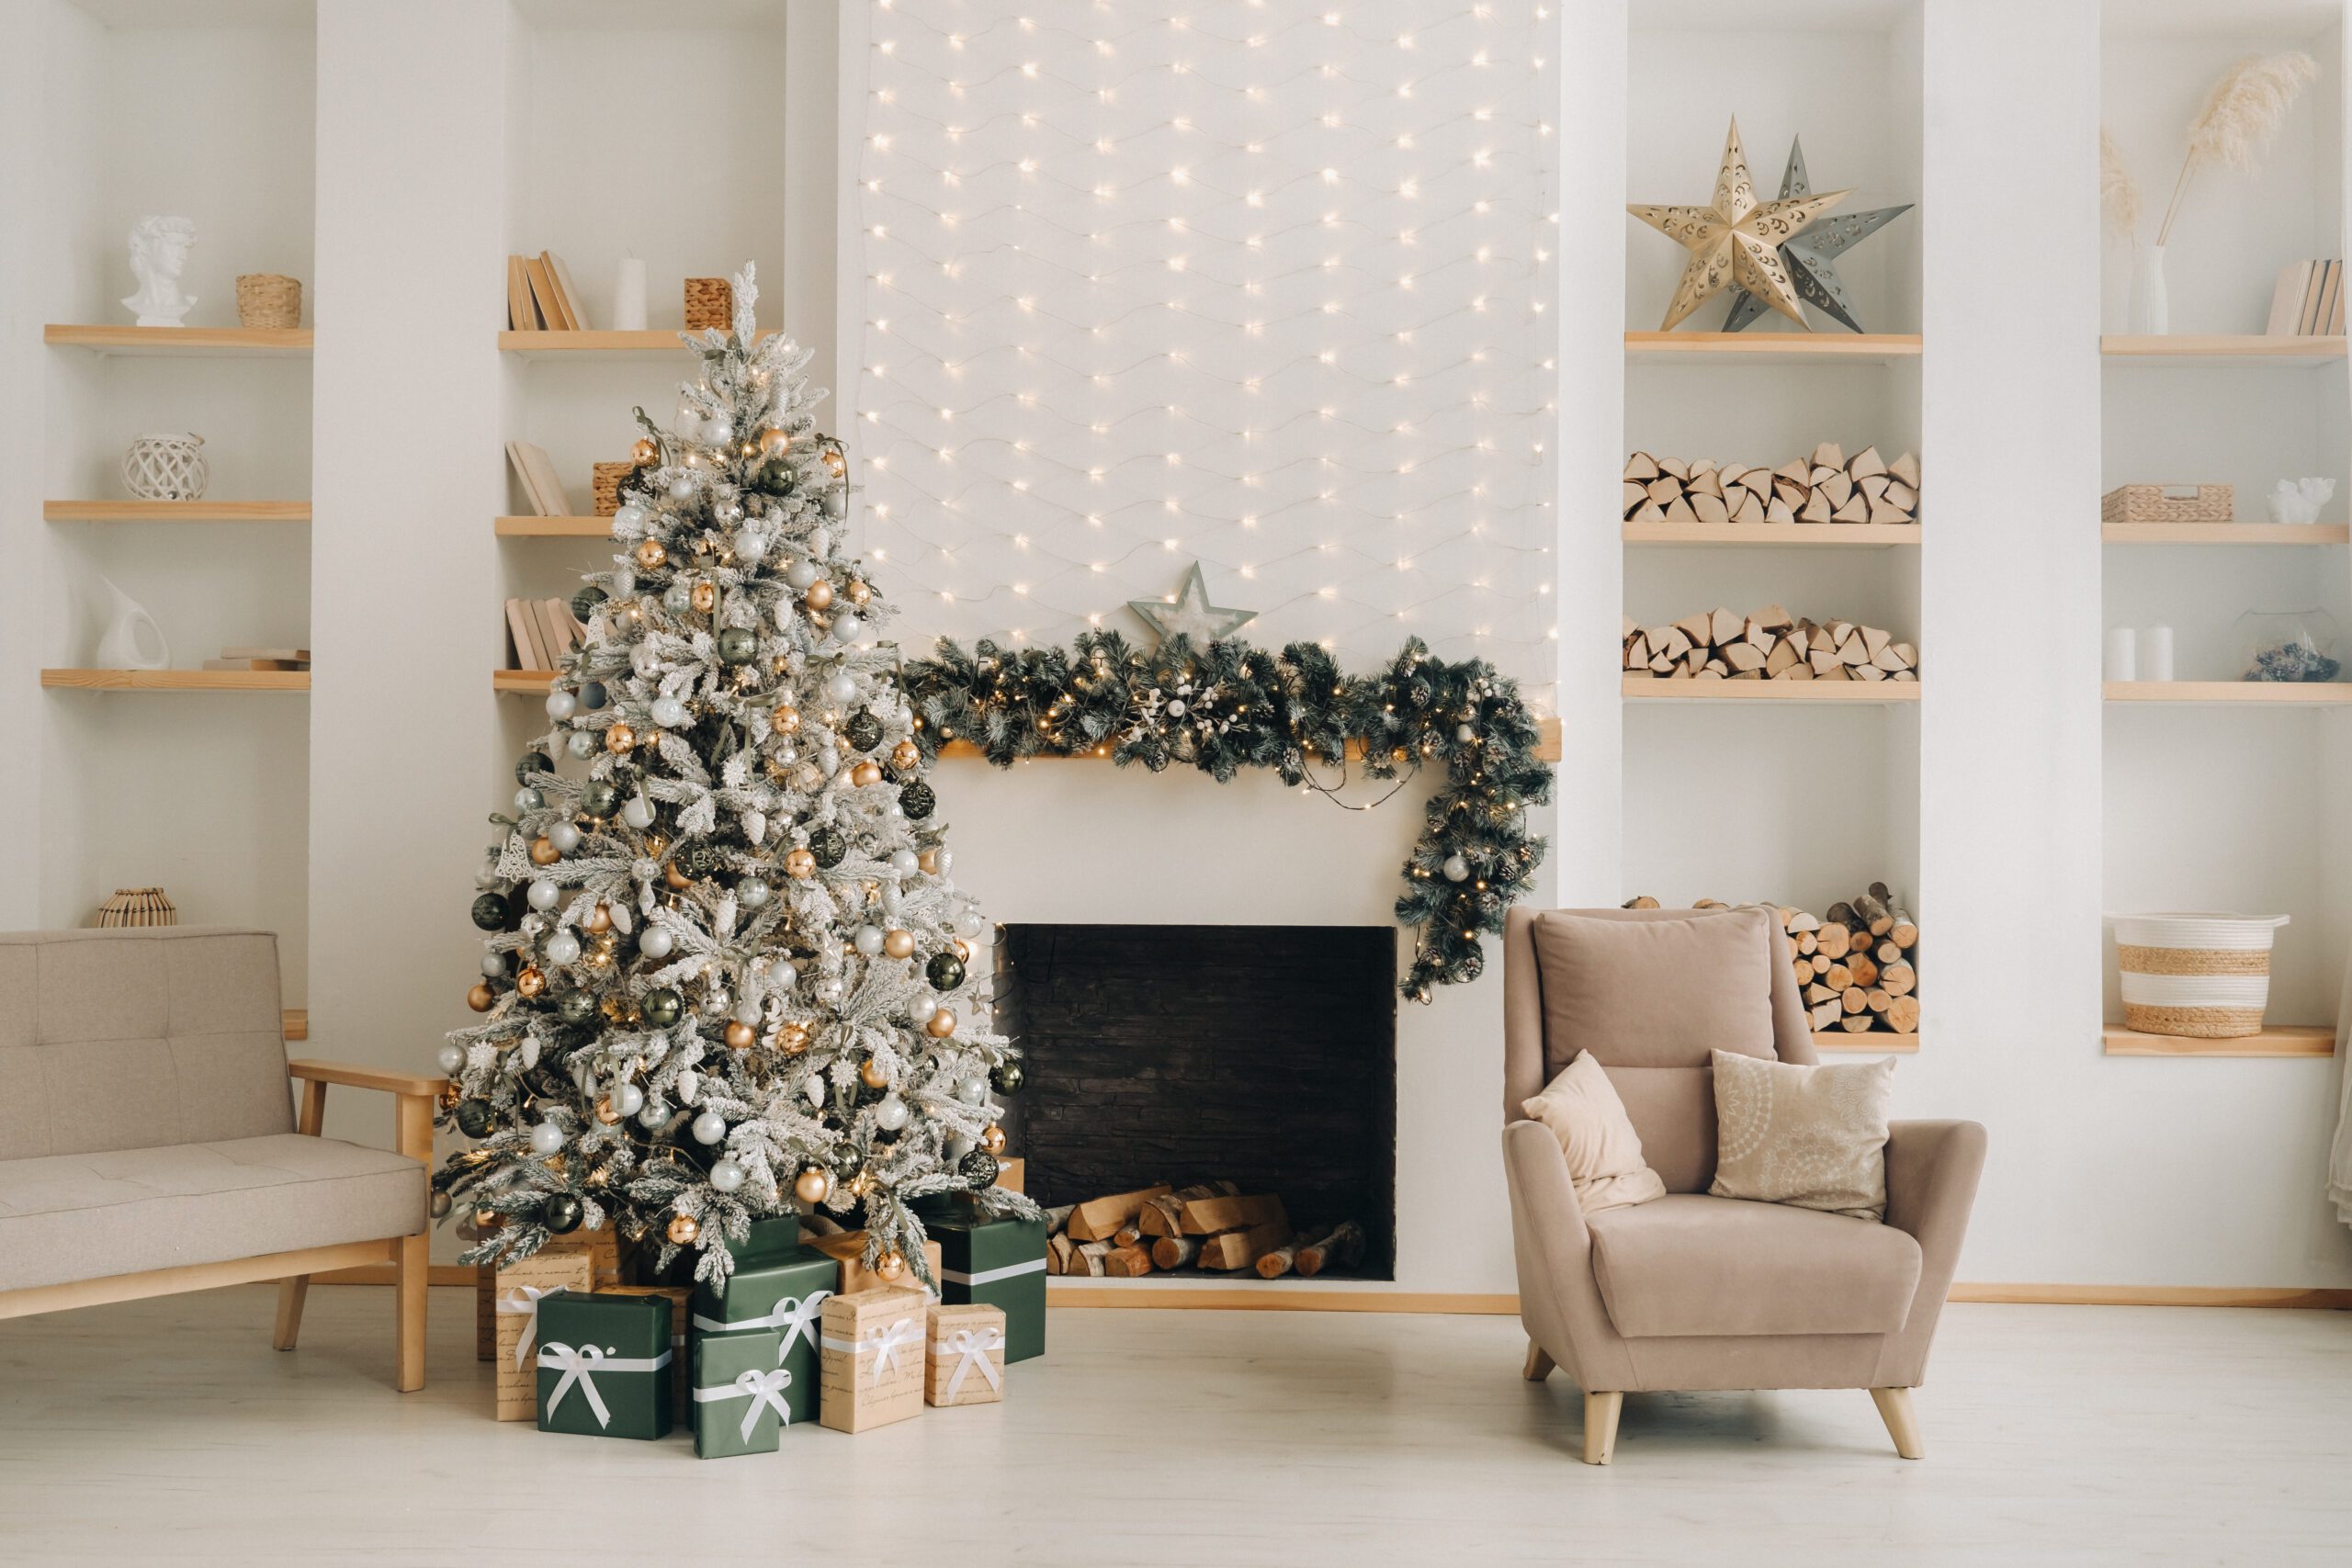 Decora tu hogar con estas 5 ideas navideñas (Envato)